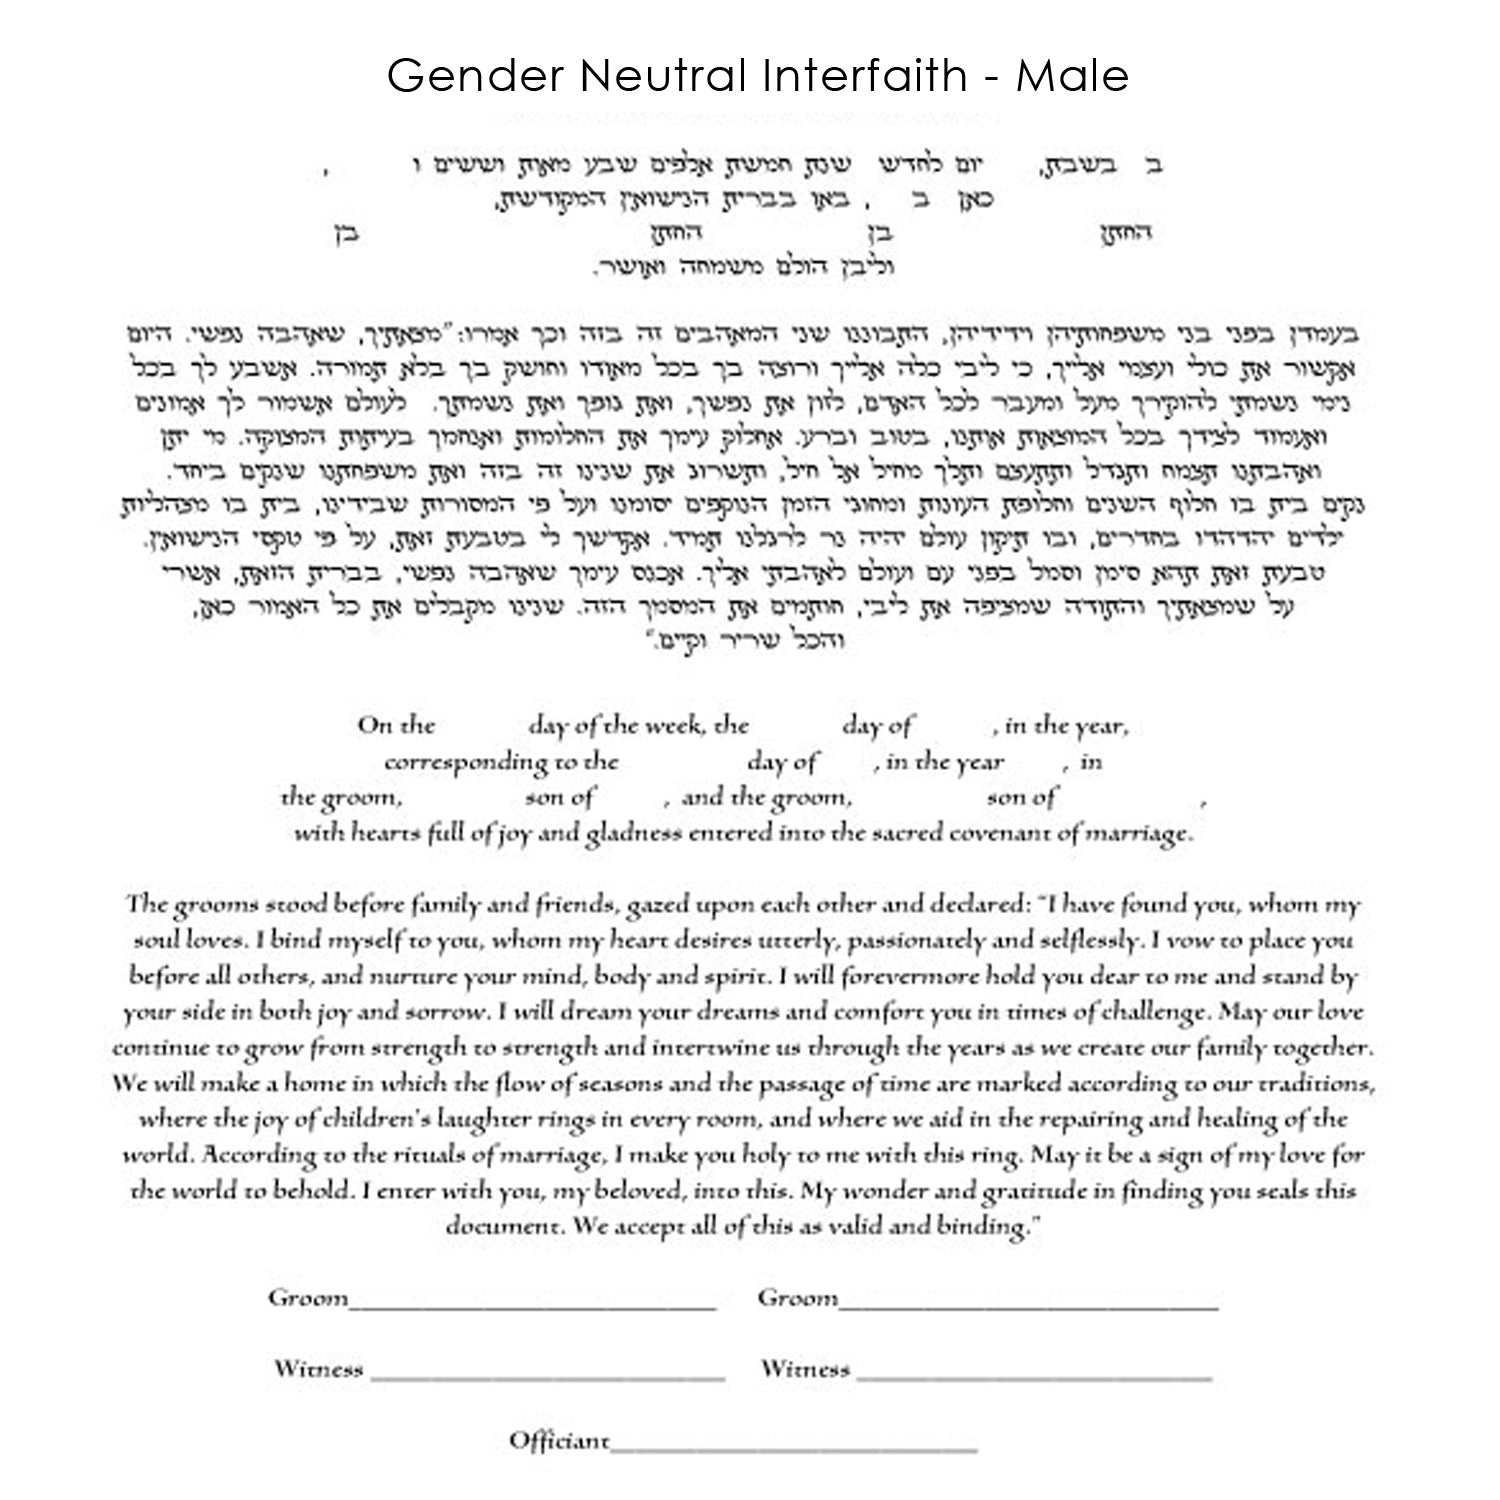 Chris Cozen - Gender Neutral Interfaith Male